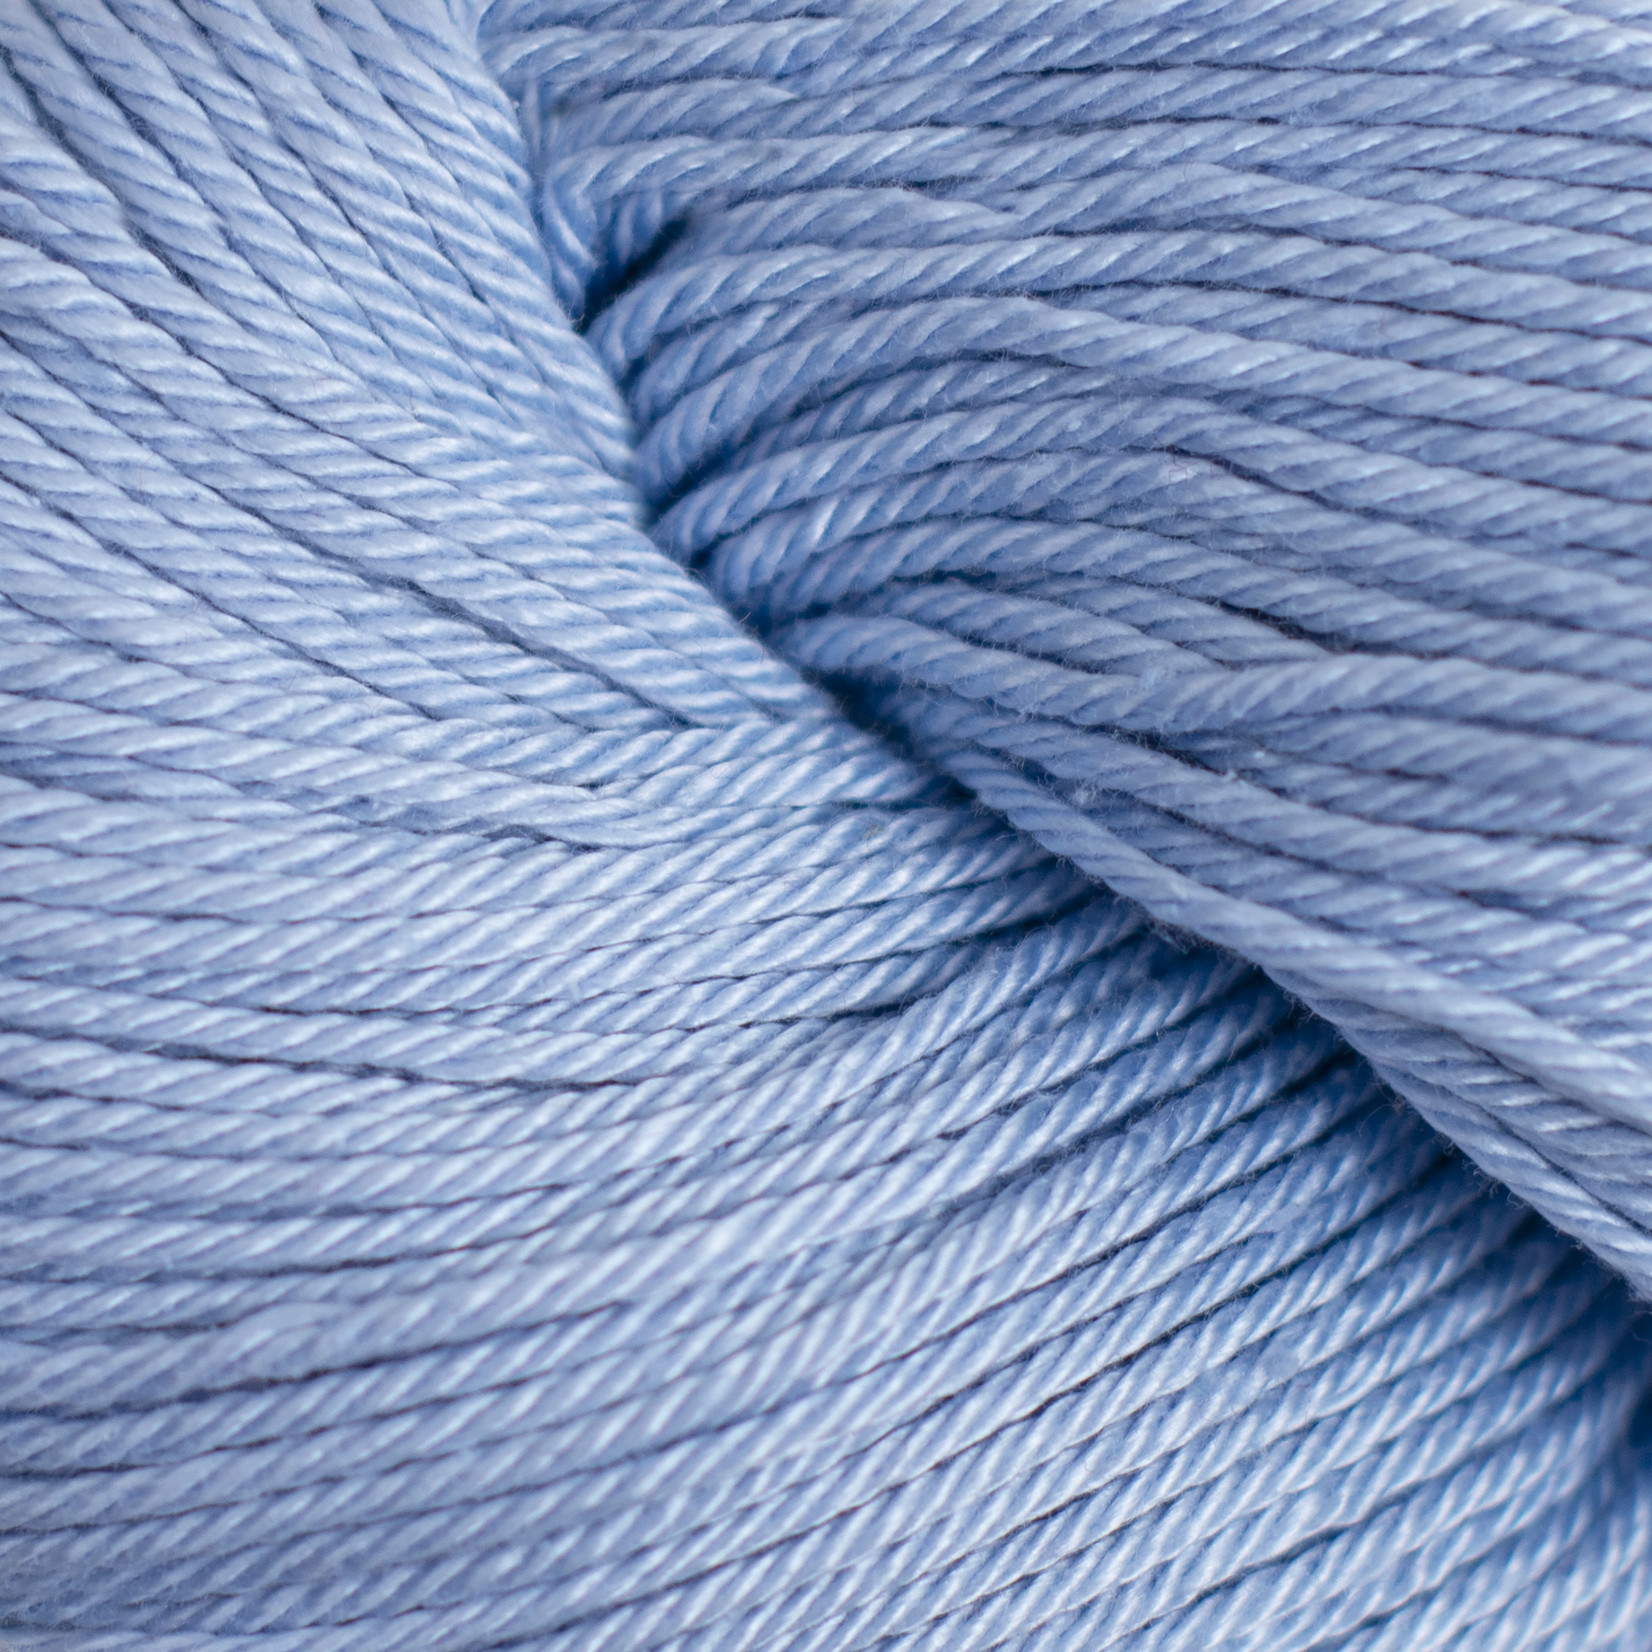 Cascade Yarn Noble Cotton